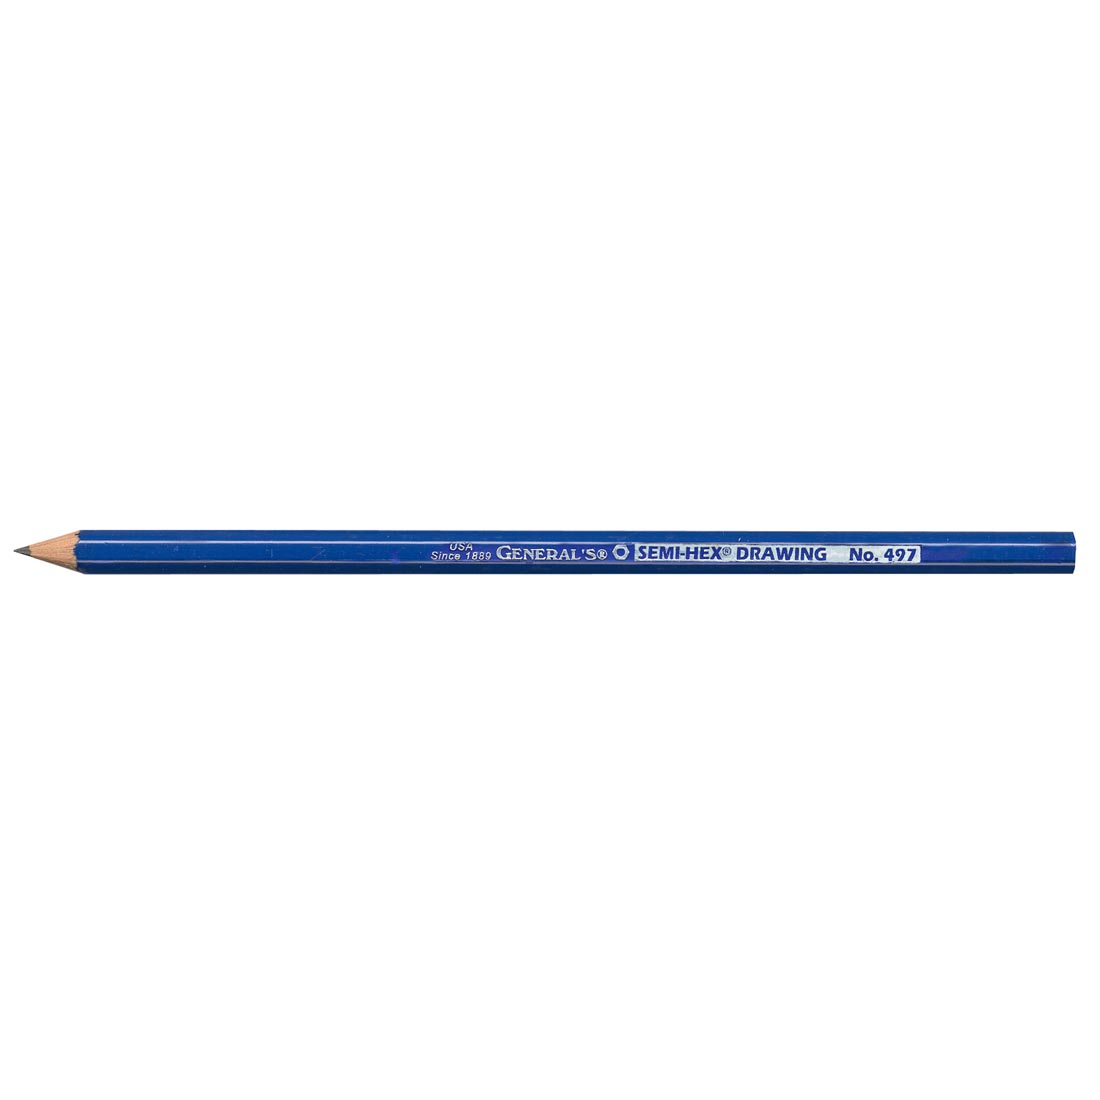 General's Semi-Hex Drawing Pencil 4H